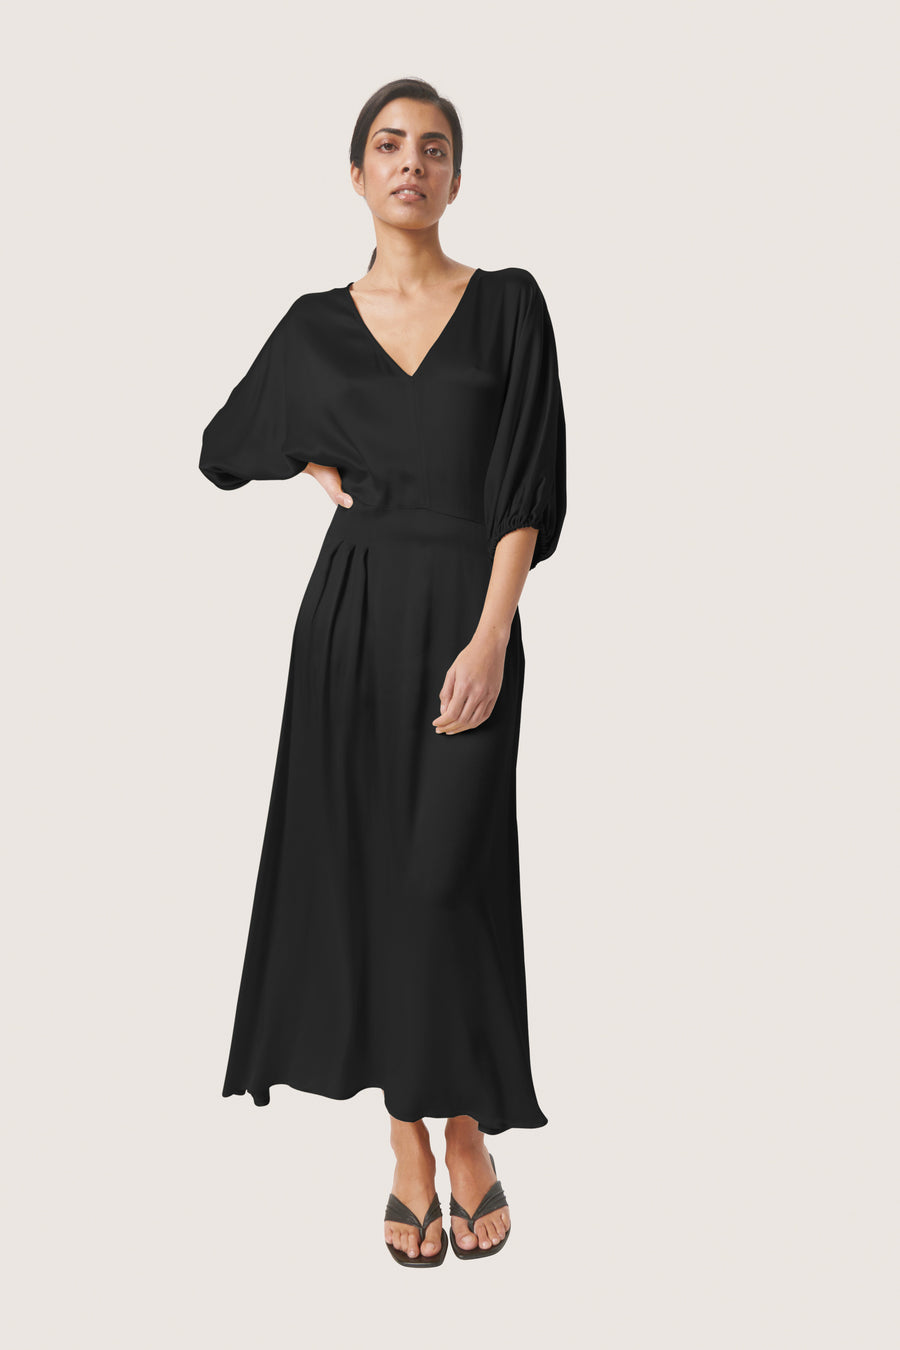 Evita Dress - L'Avenue Boutique